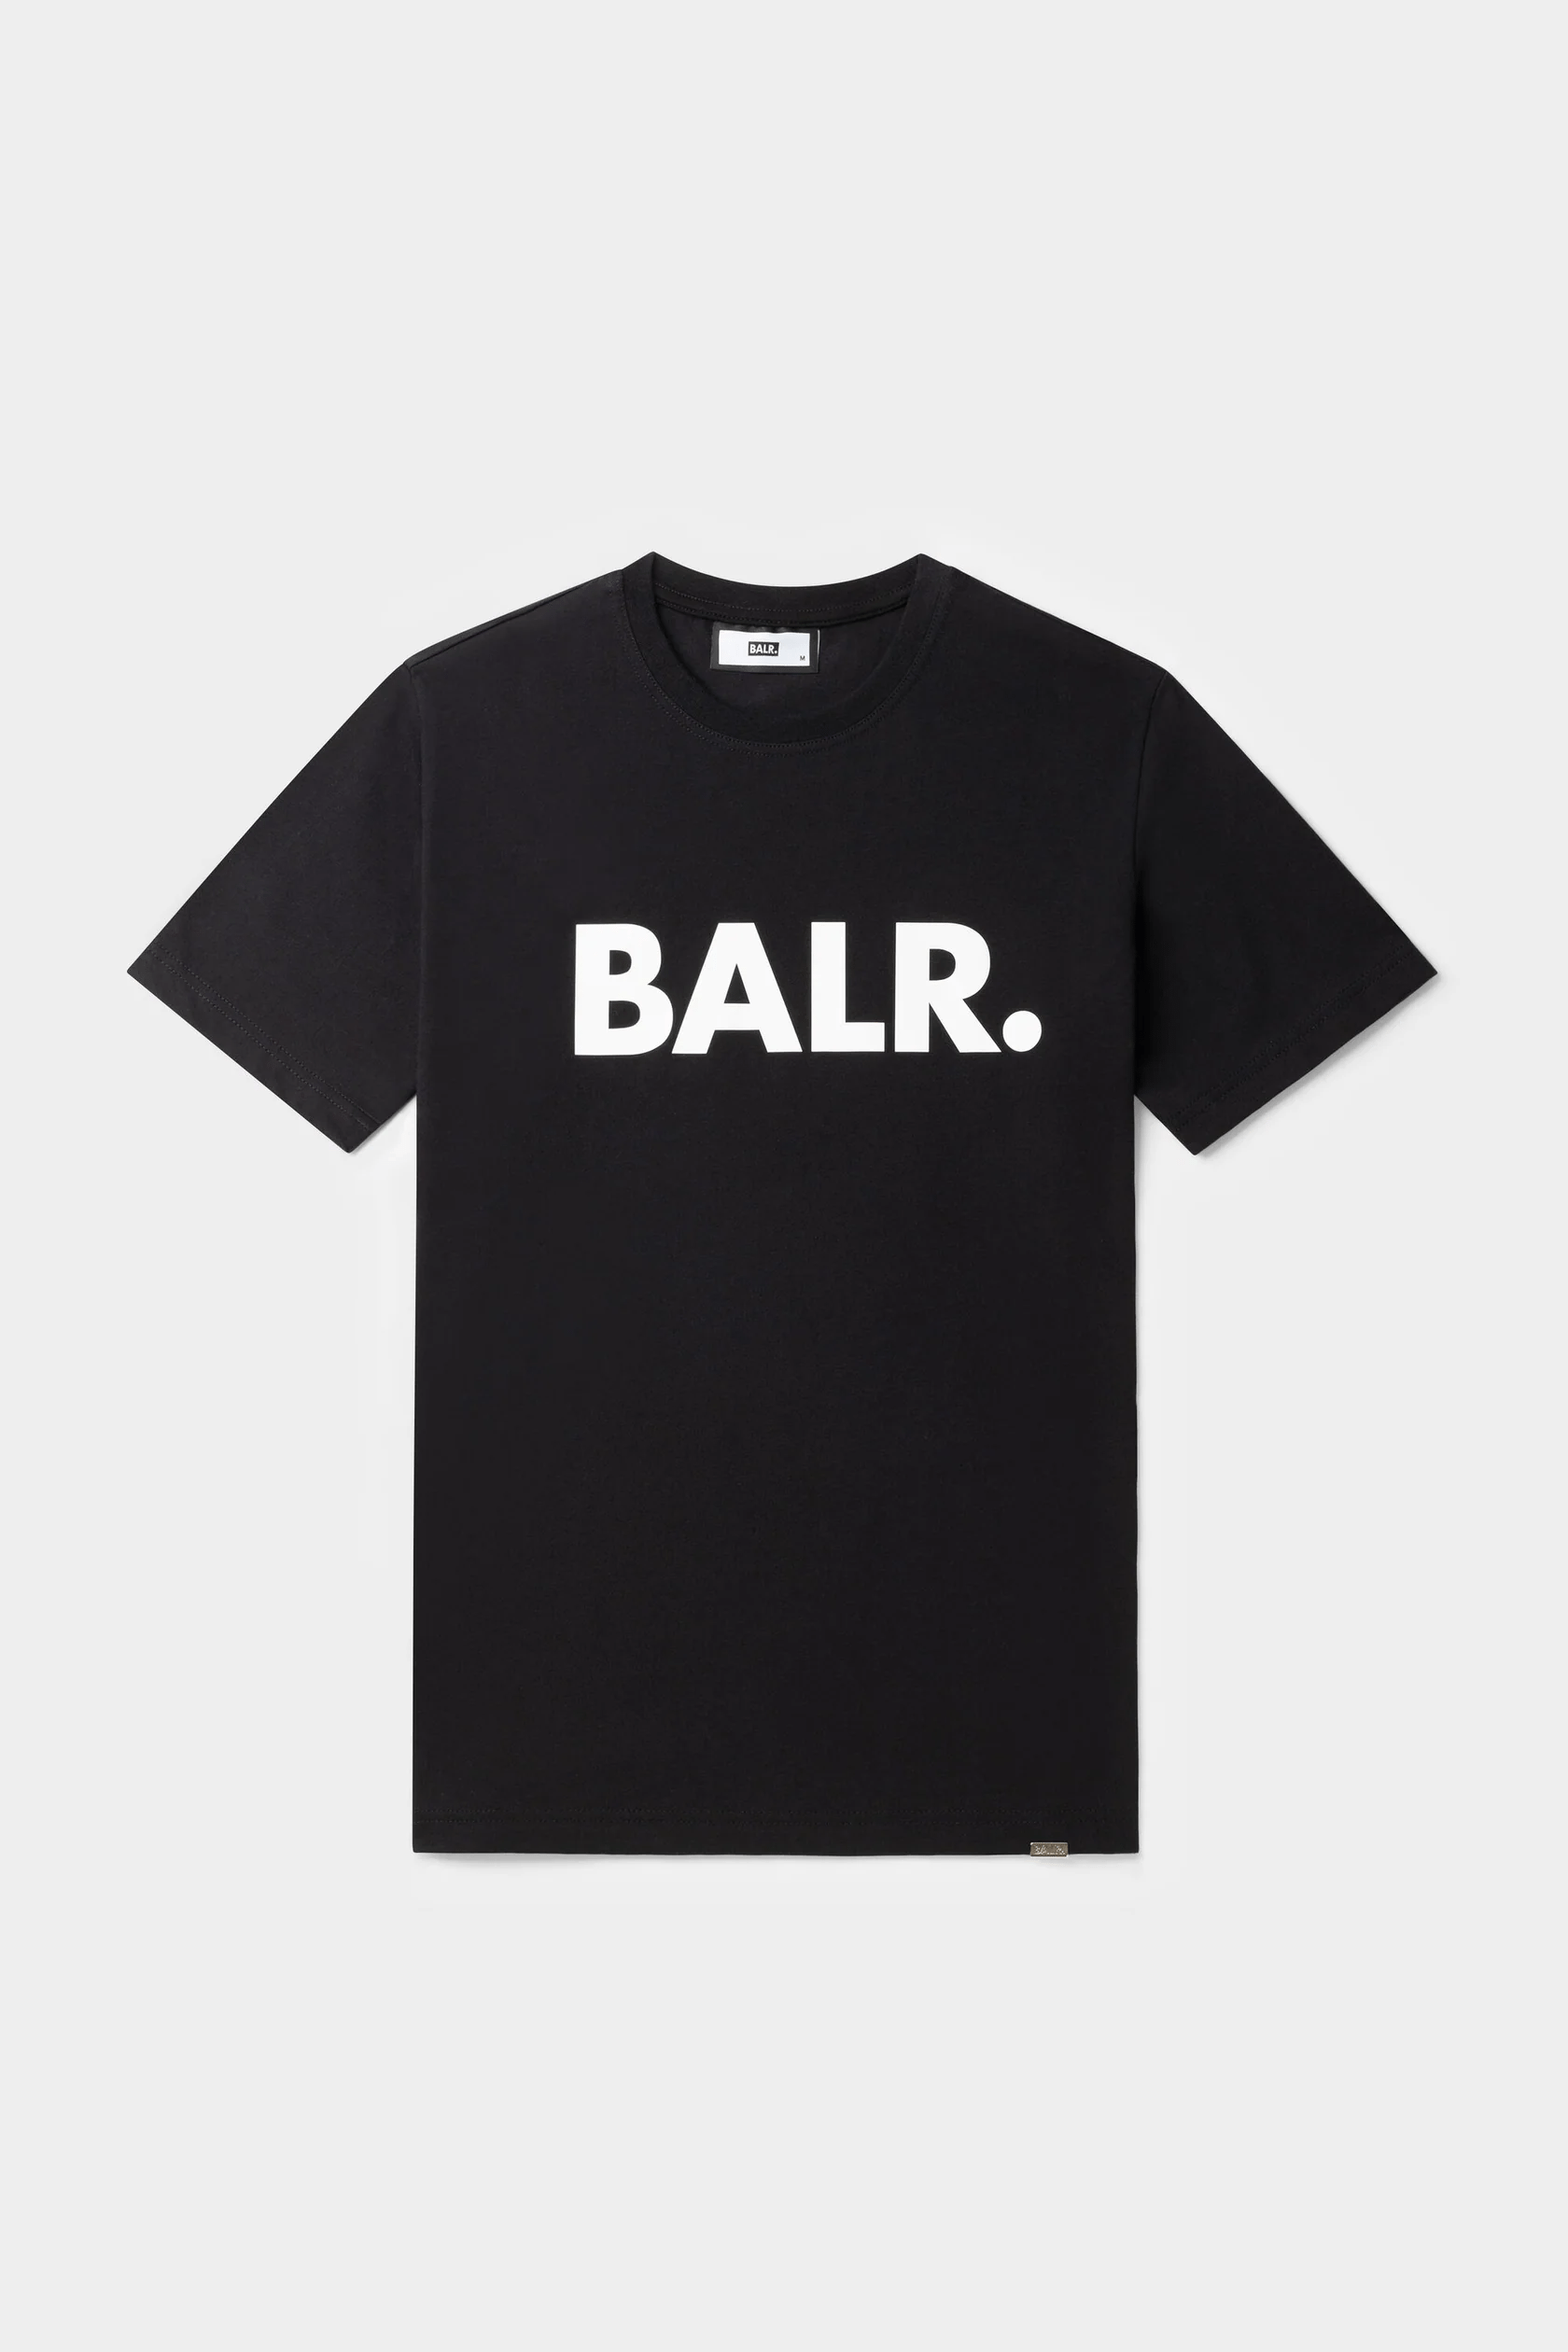 CC BALR. straight T-shirt